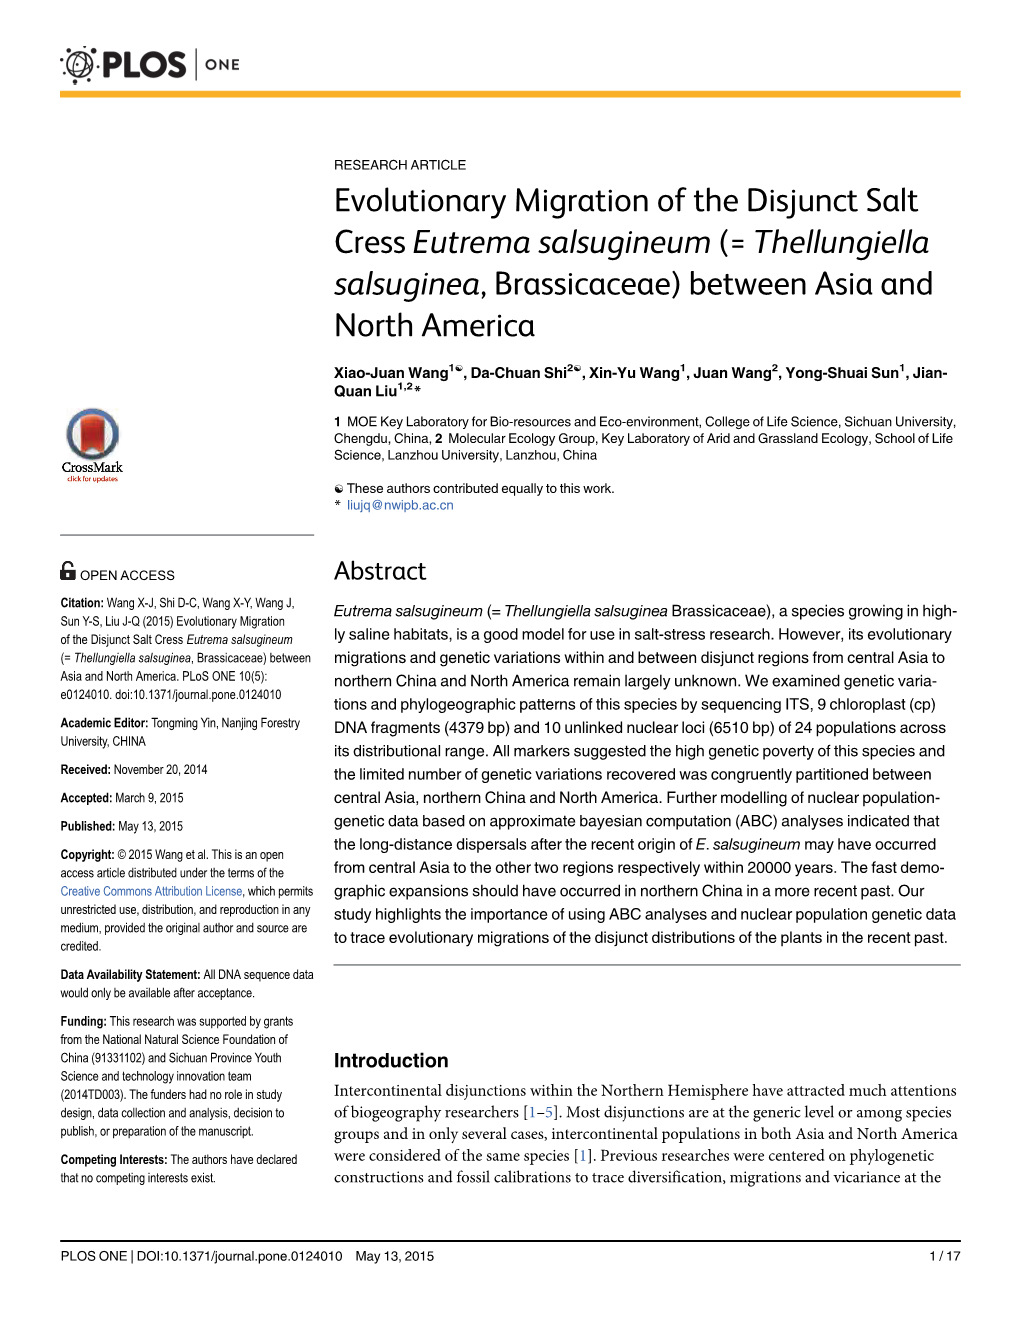 Evolutionary Migration of the Disjunct Salt Cress Eutrema Salsugineum (= Thellungiella Salsuginea, Brassicaceae) Between Asia and North America